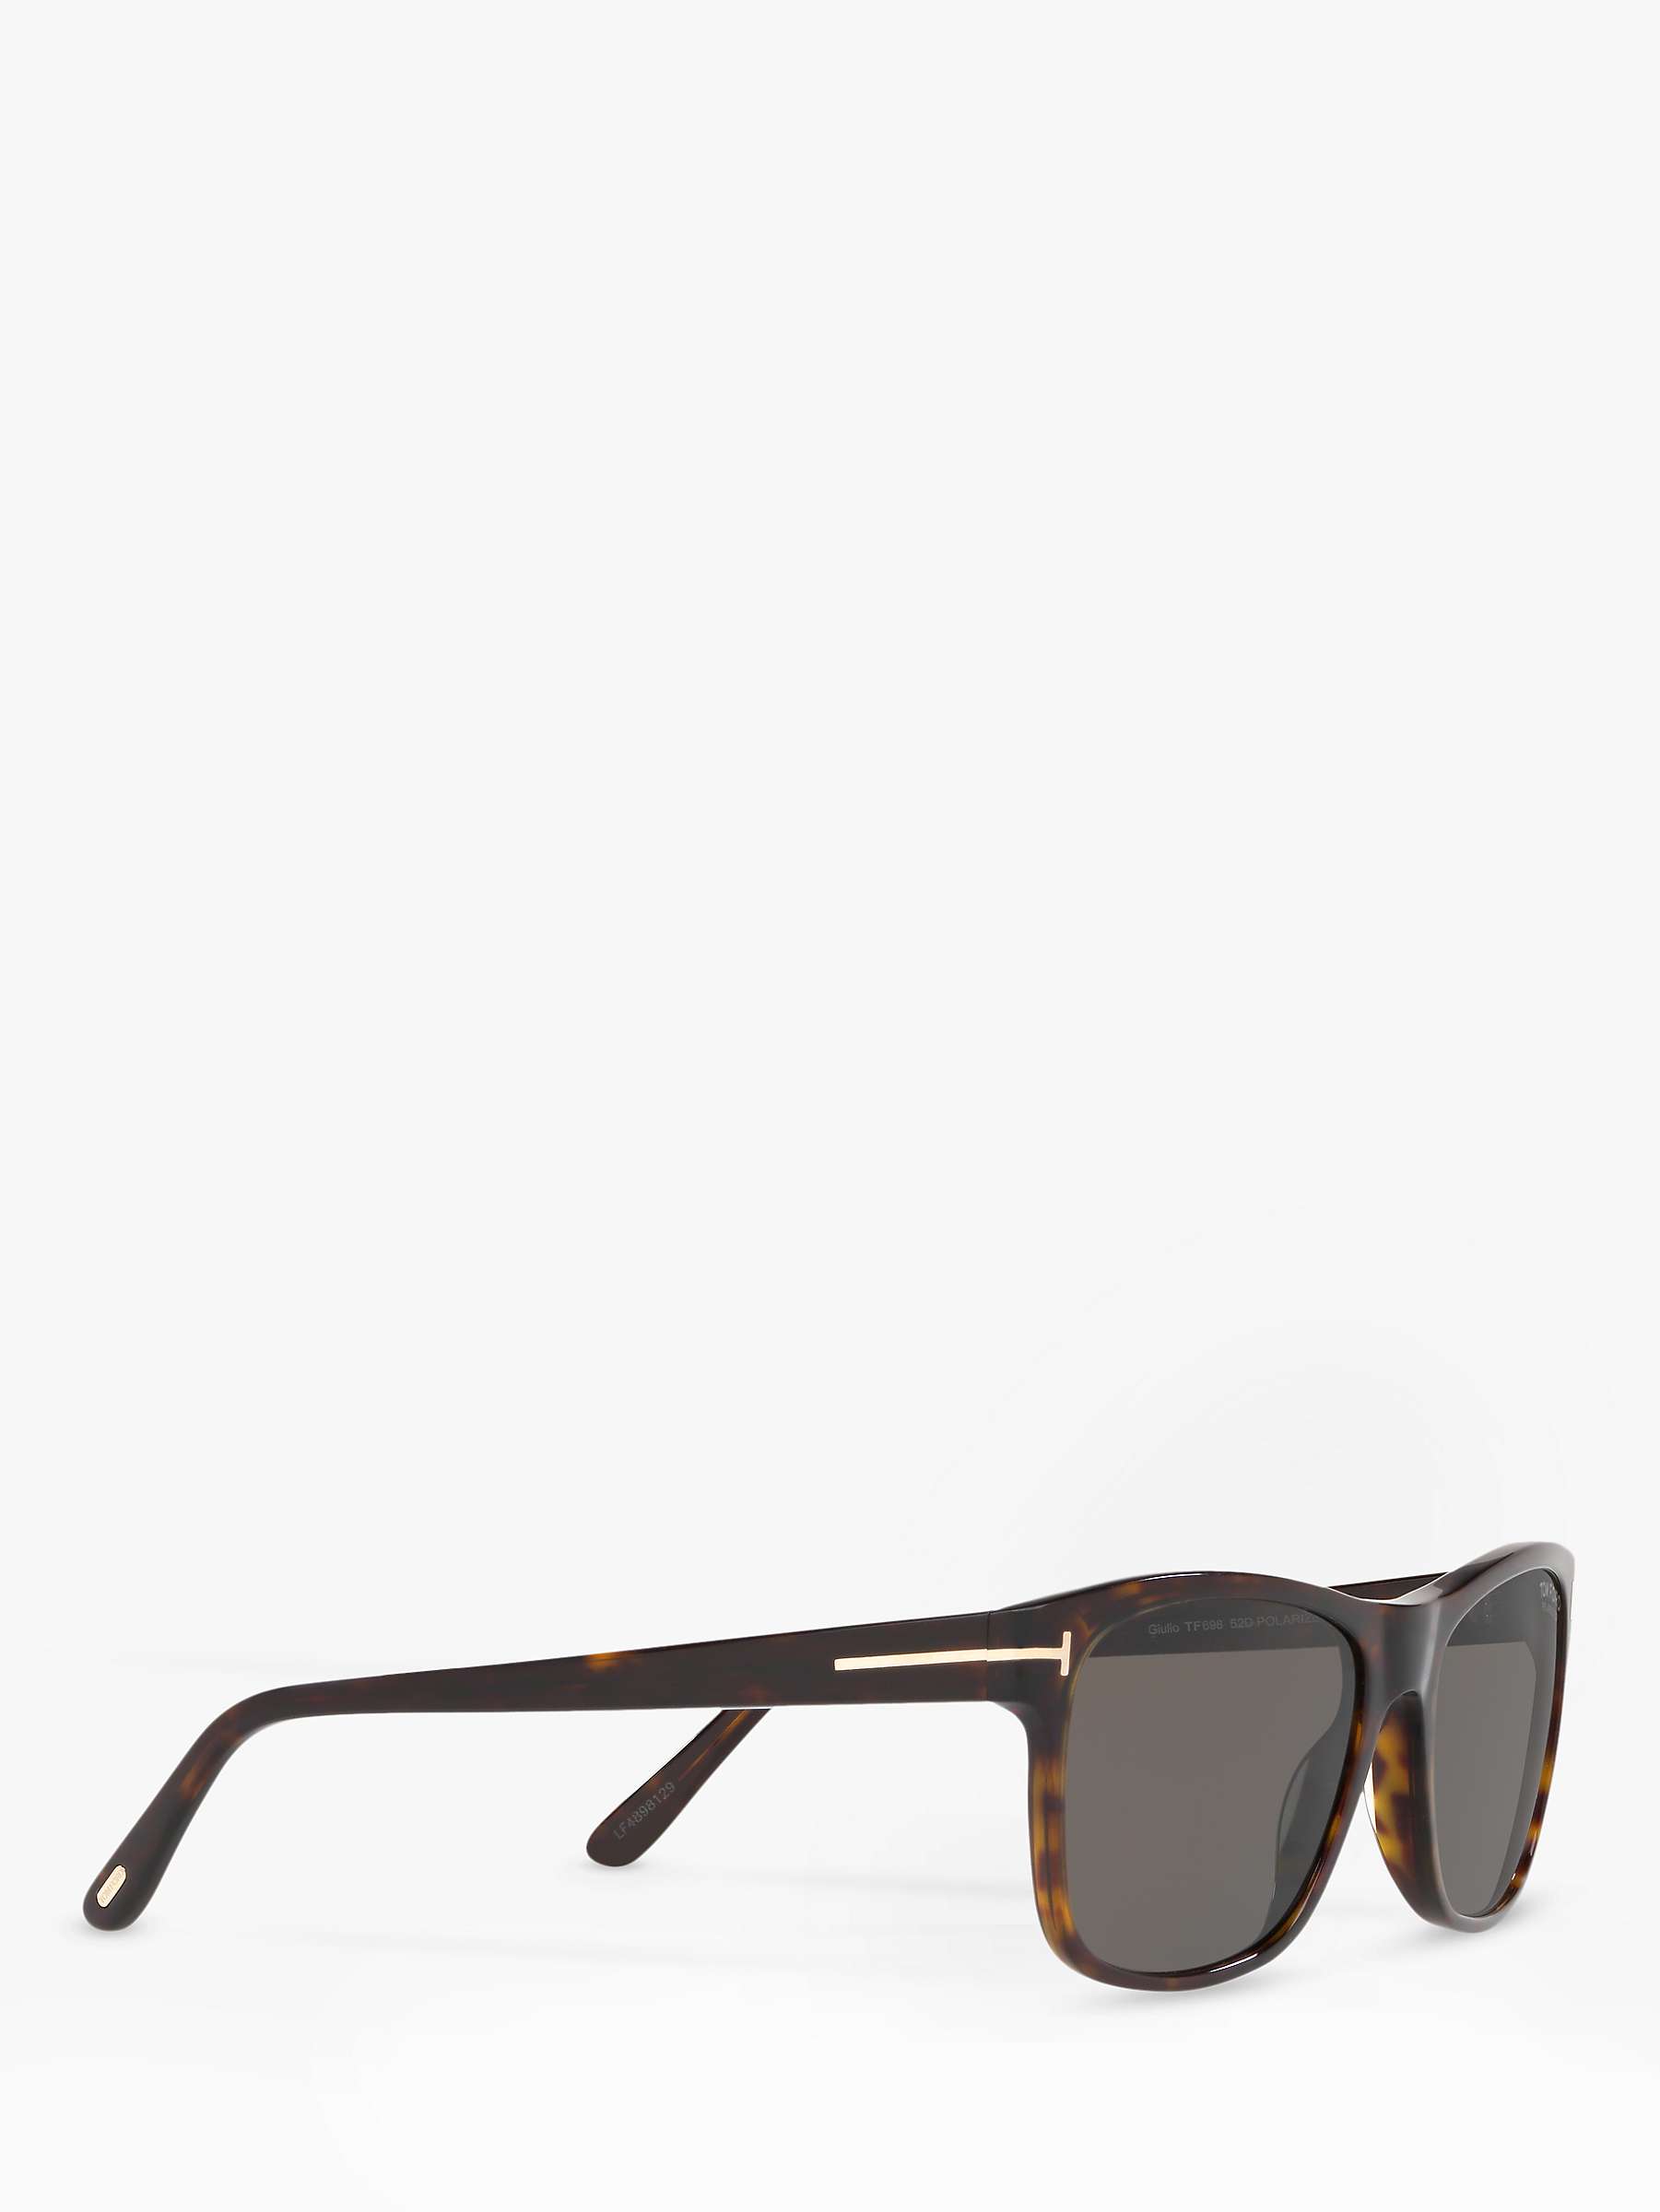 Buy TOM FORD FT0698 Men's Giulio Polarised Square Sunglasses, Tortoise/Grey Online at johnlewis.com